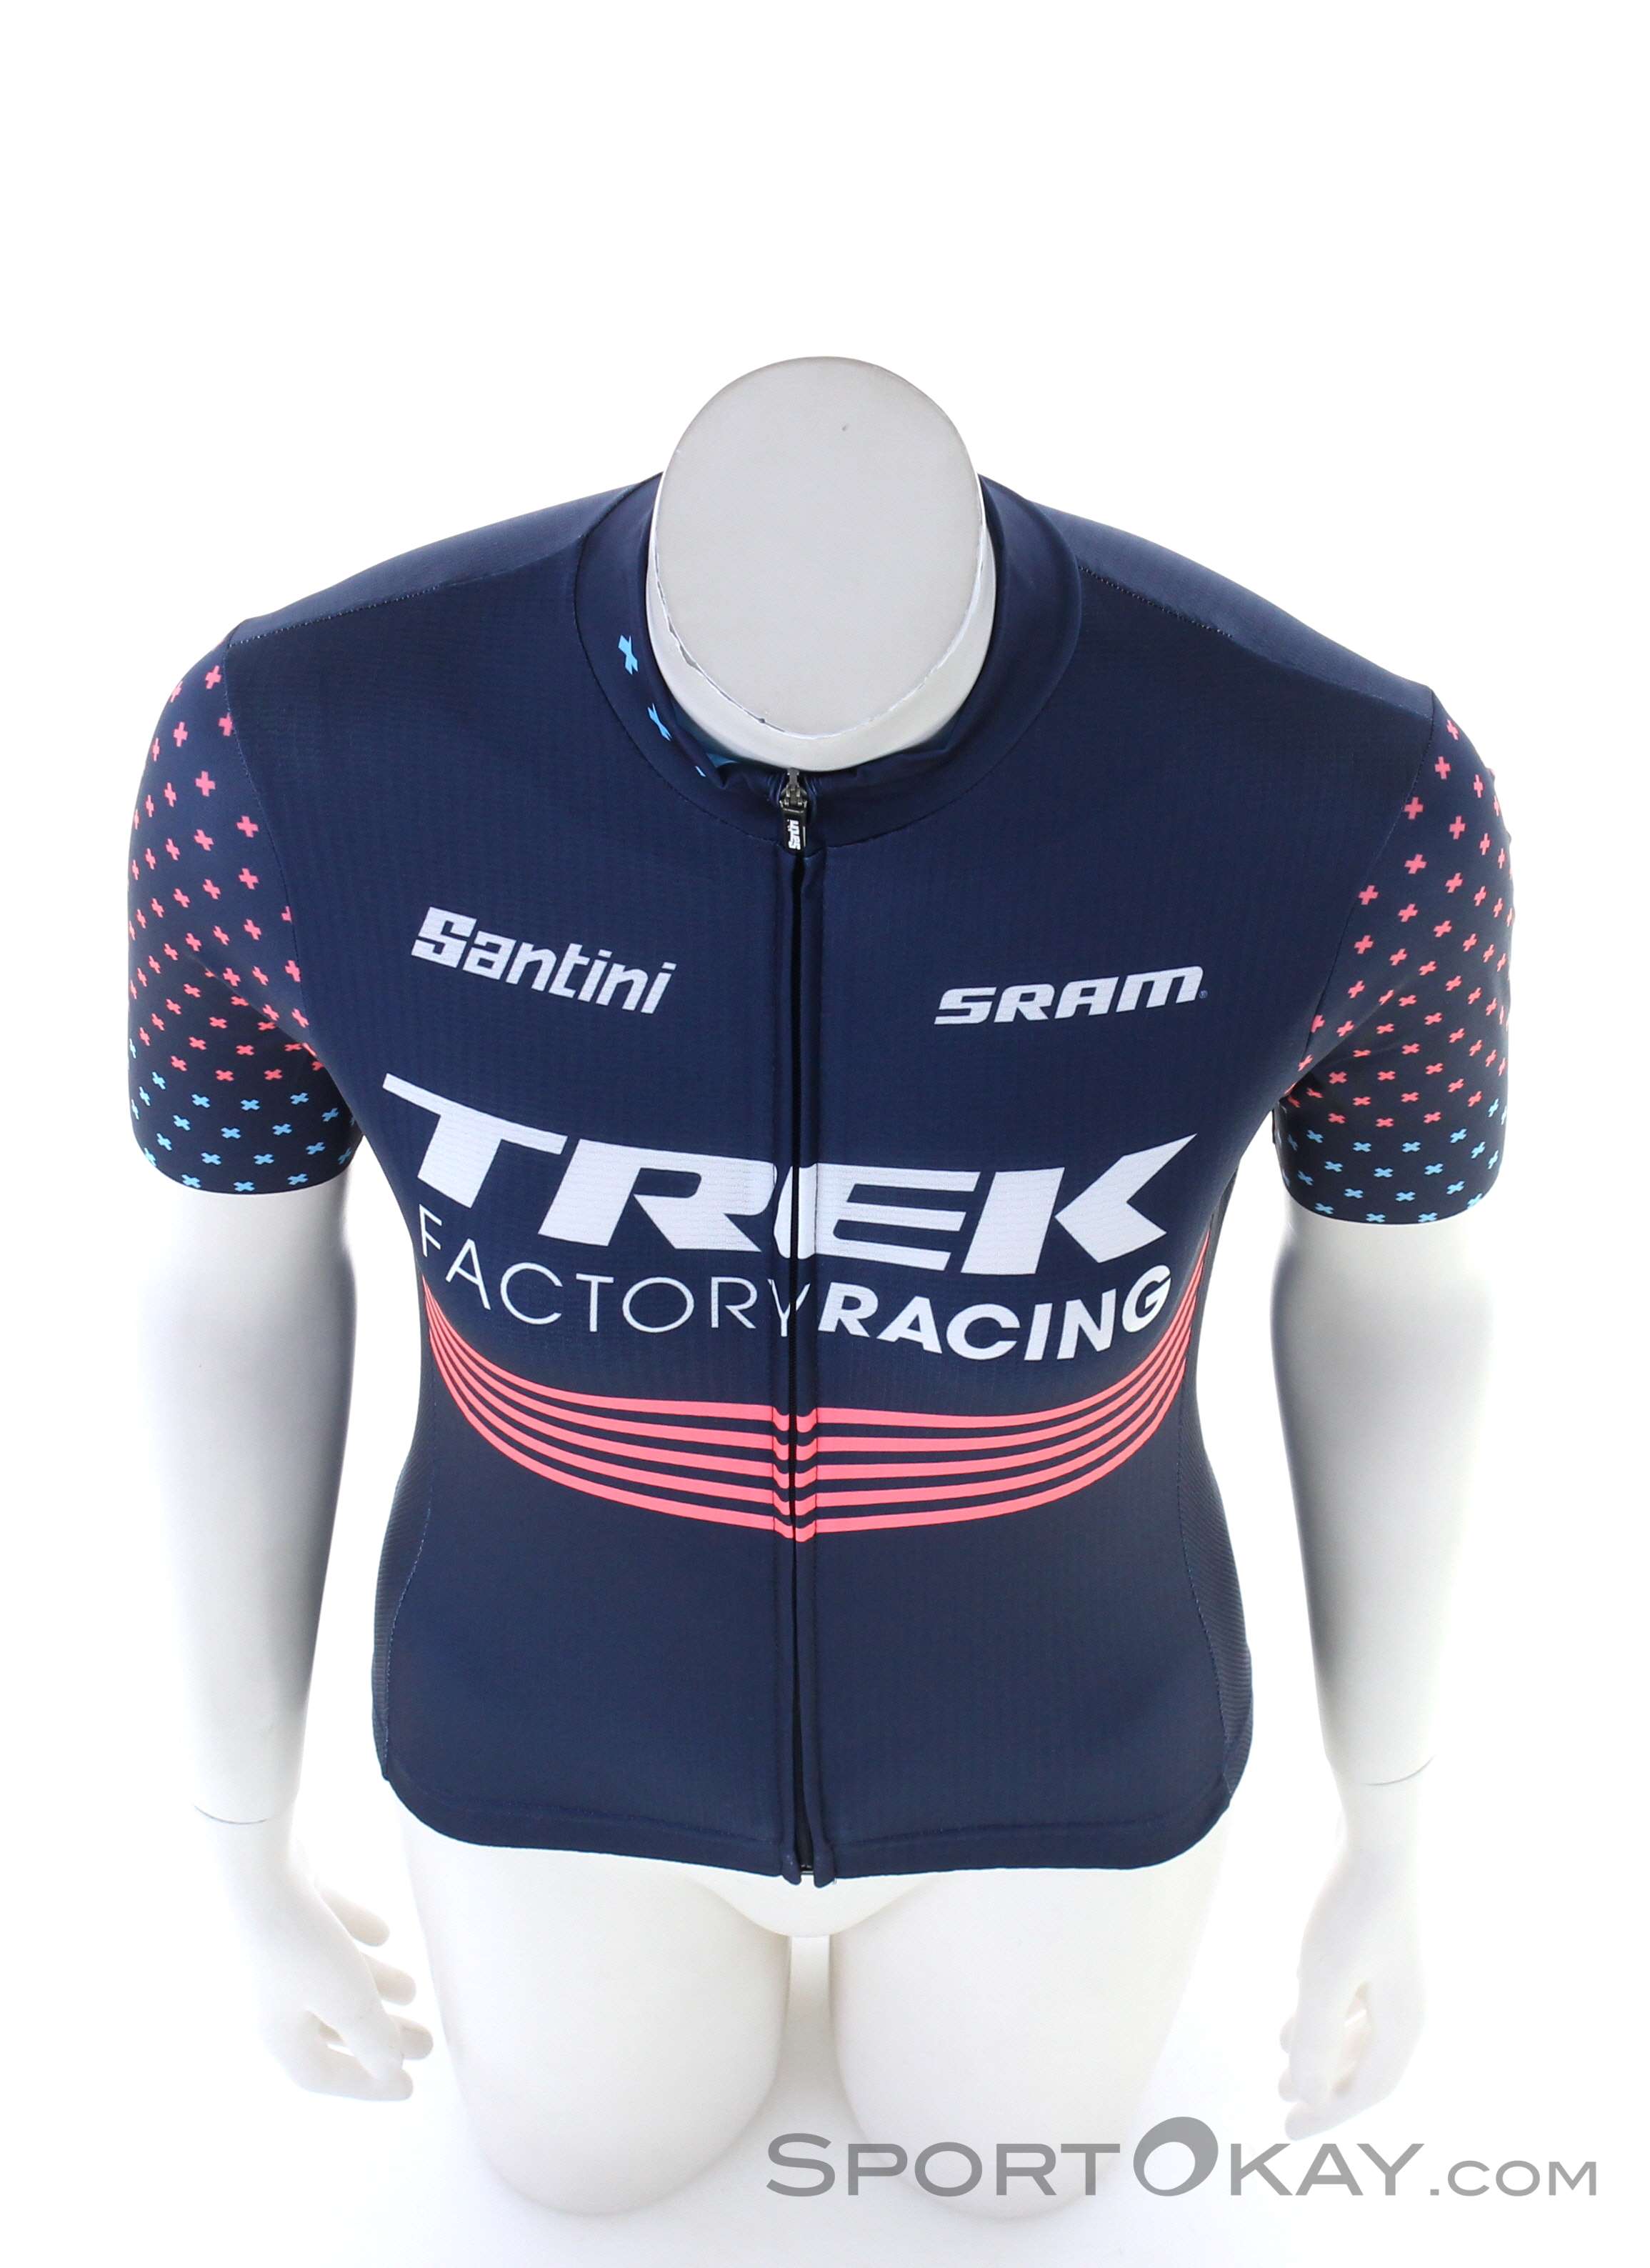 Santini Trek Factory Racing Men's CX Team Replica Cycling Jersey